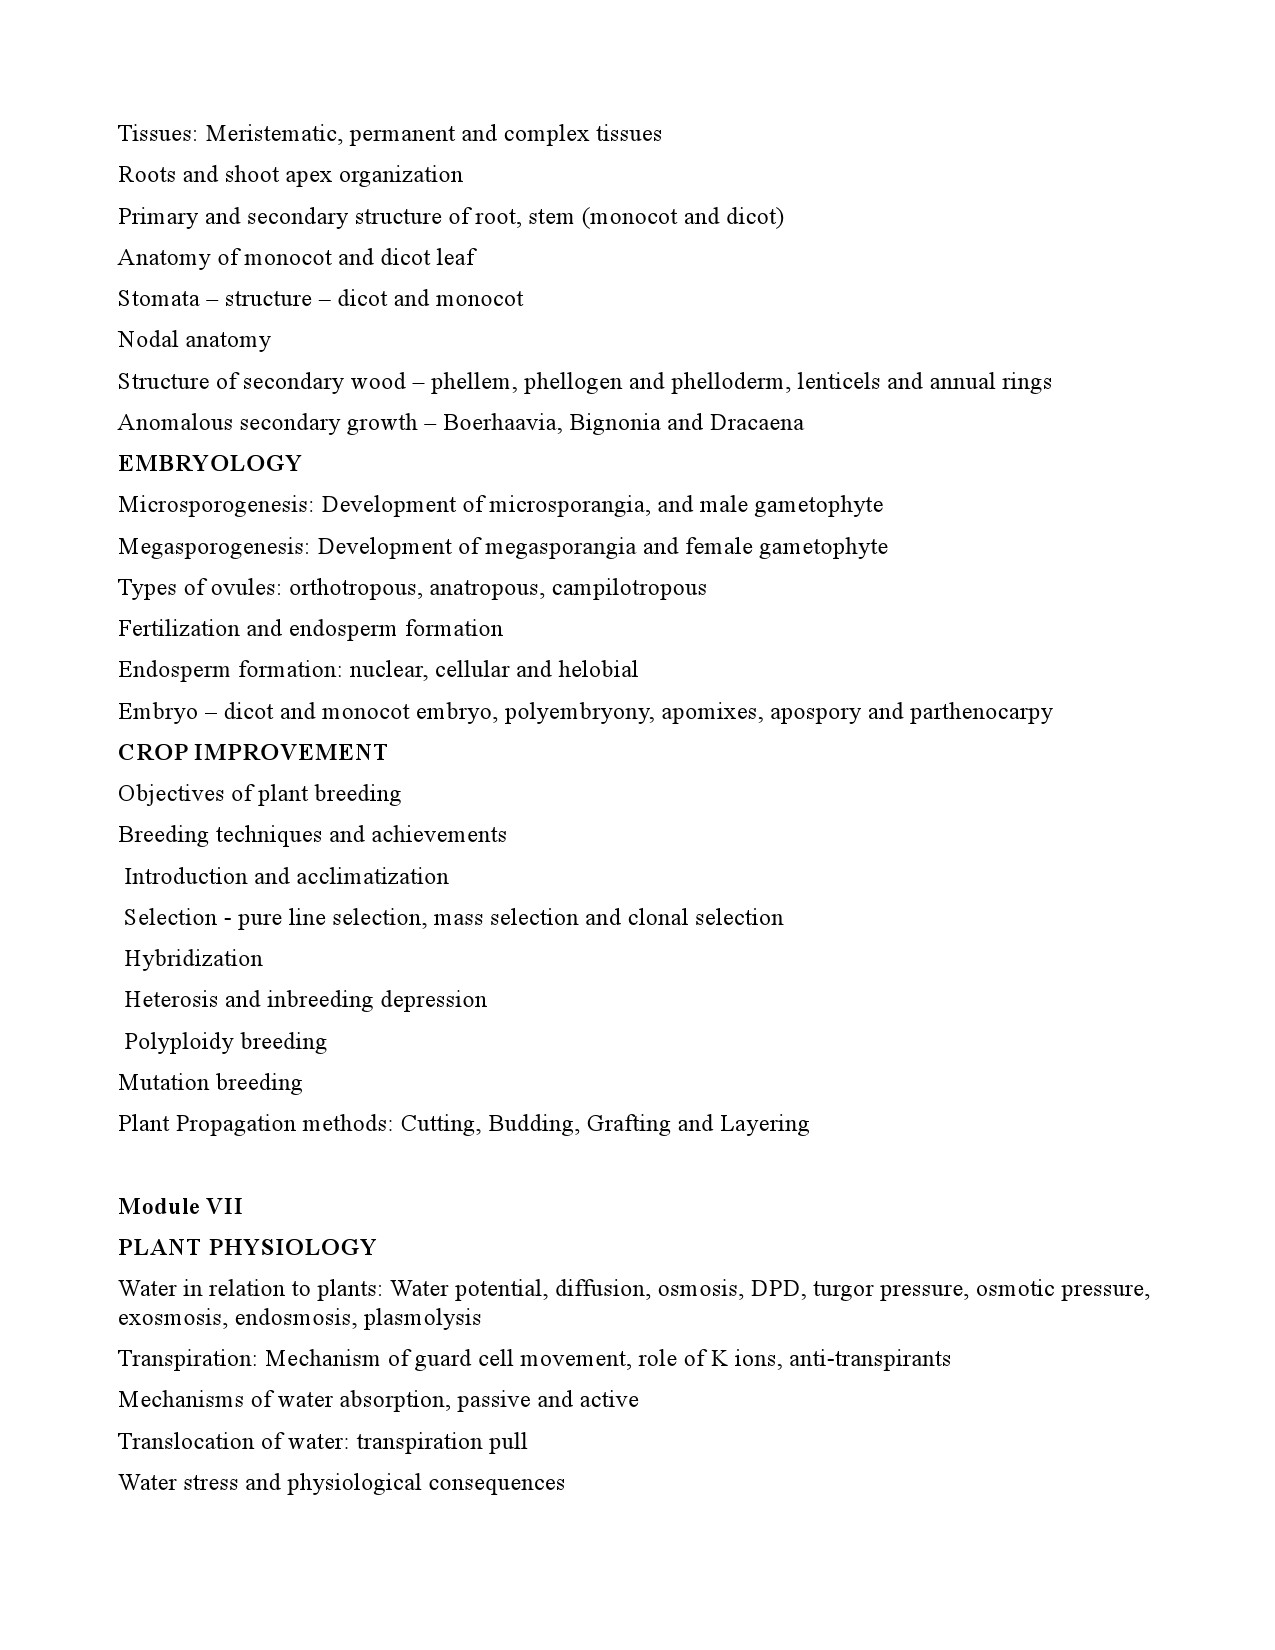 High School Assistant Natural Science Part A Kerala Examination Syllabus 2021 - Notification Image 11